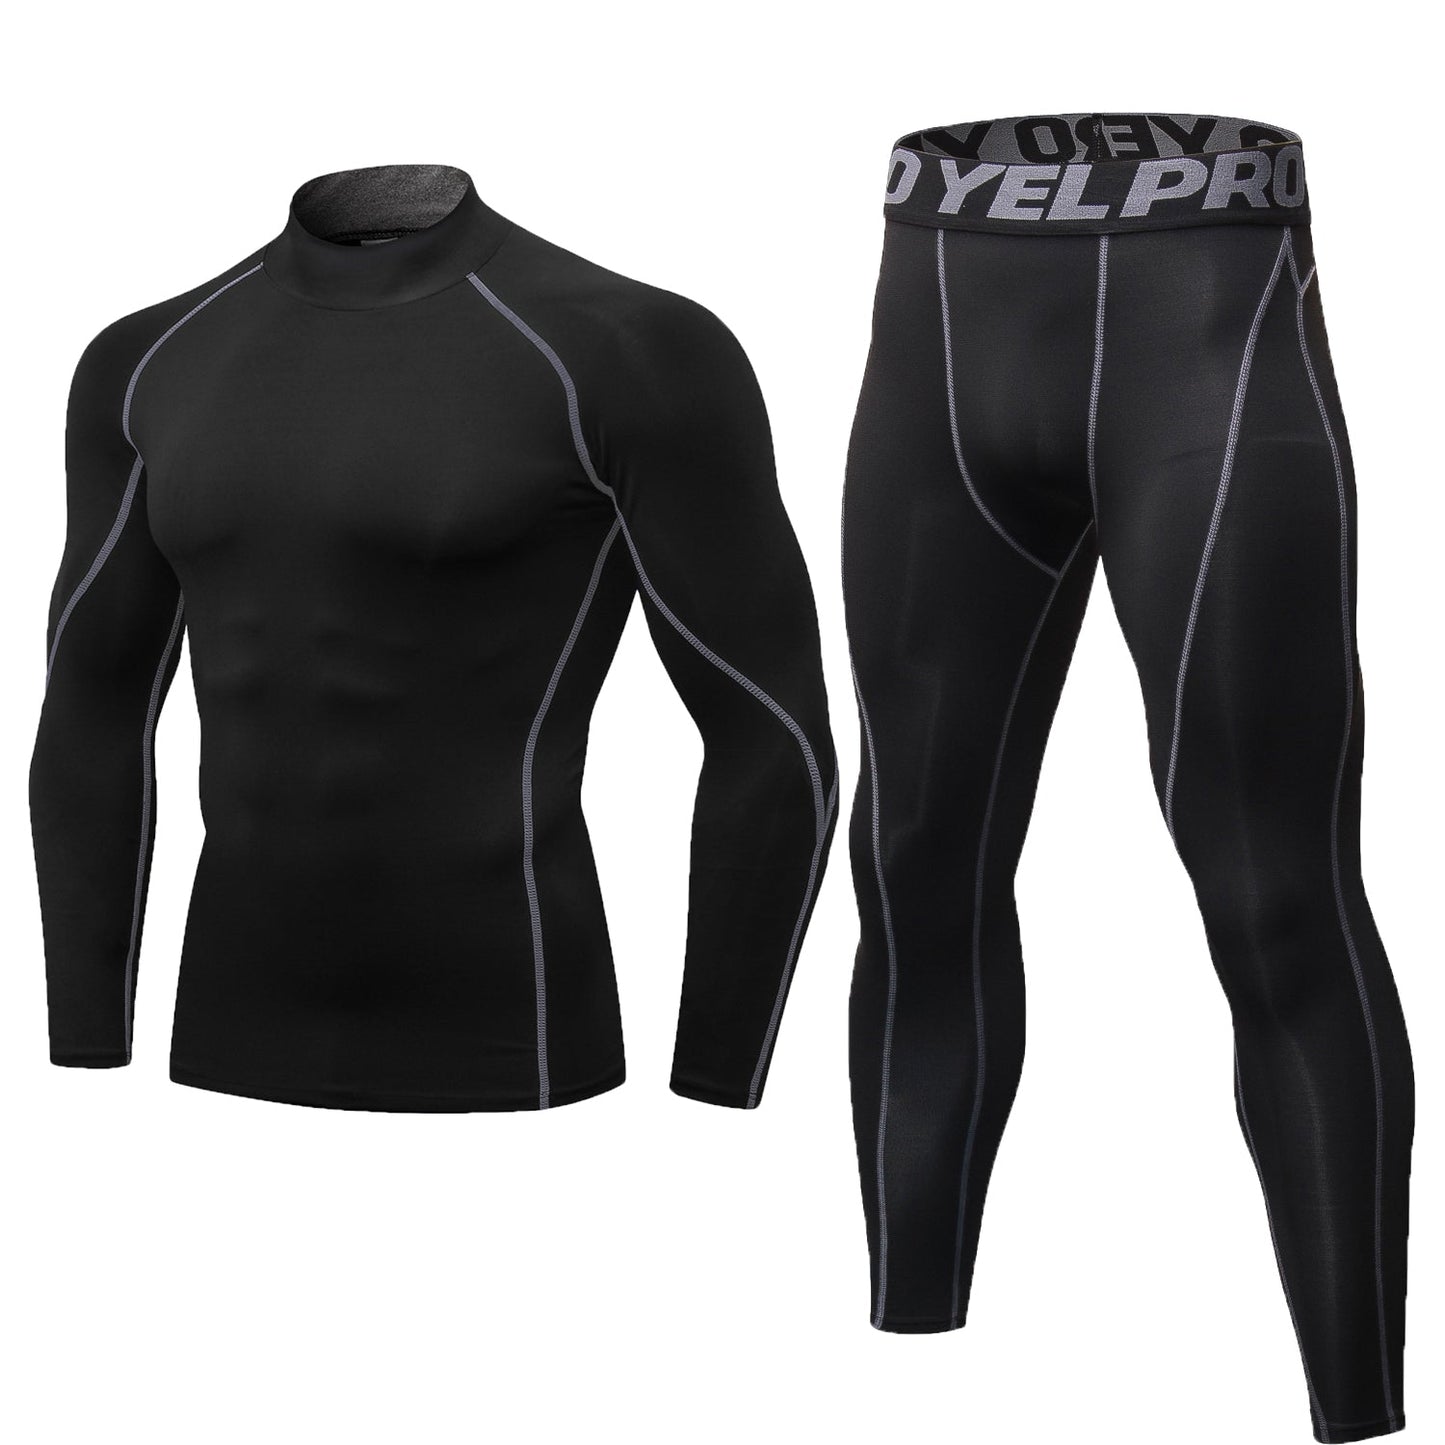 Men's Skin Tight Fitness Sports Training Tight Pant Quick Drying - Black